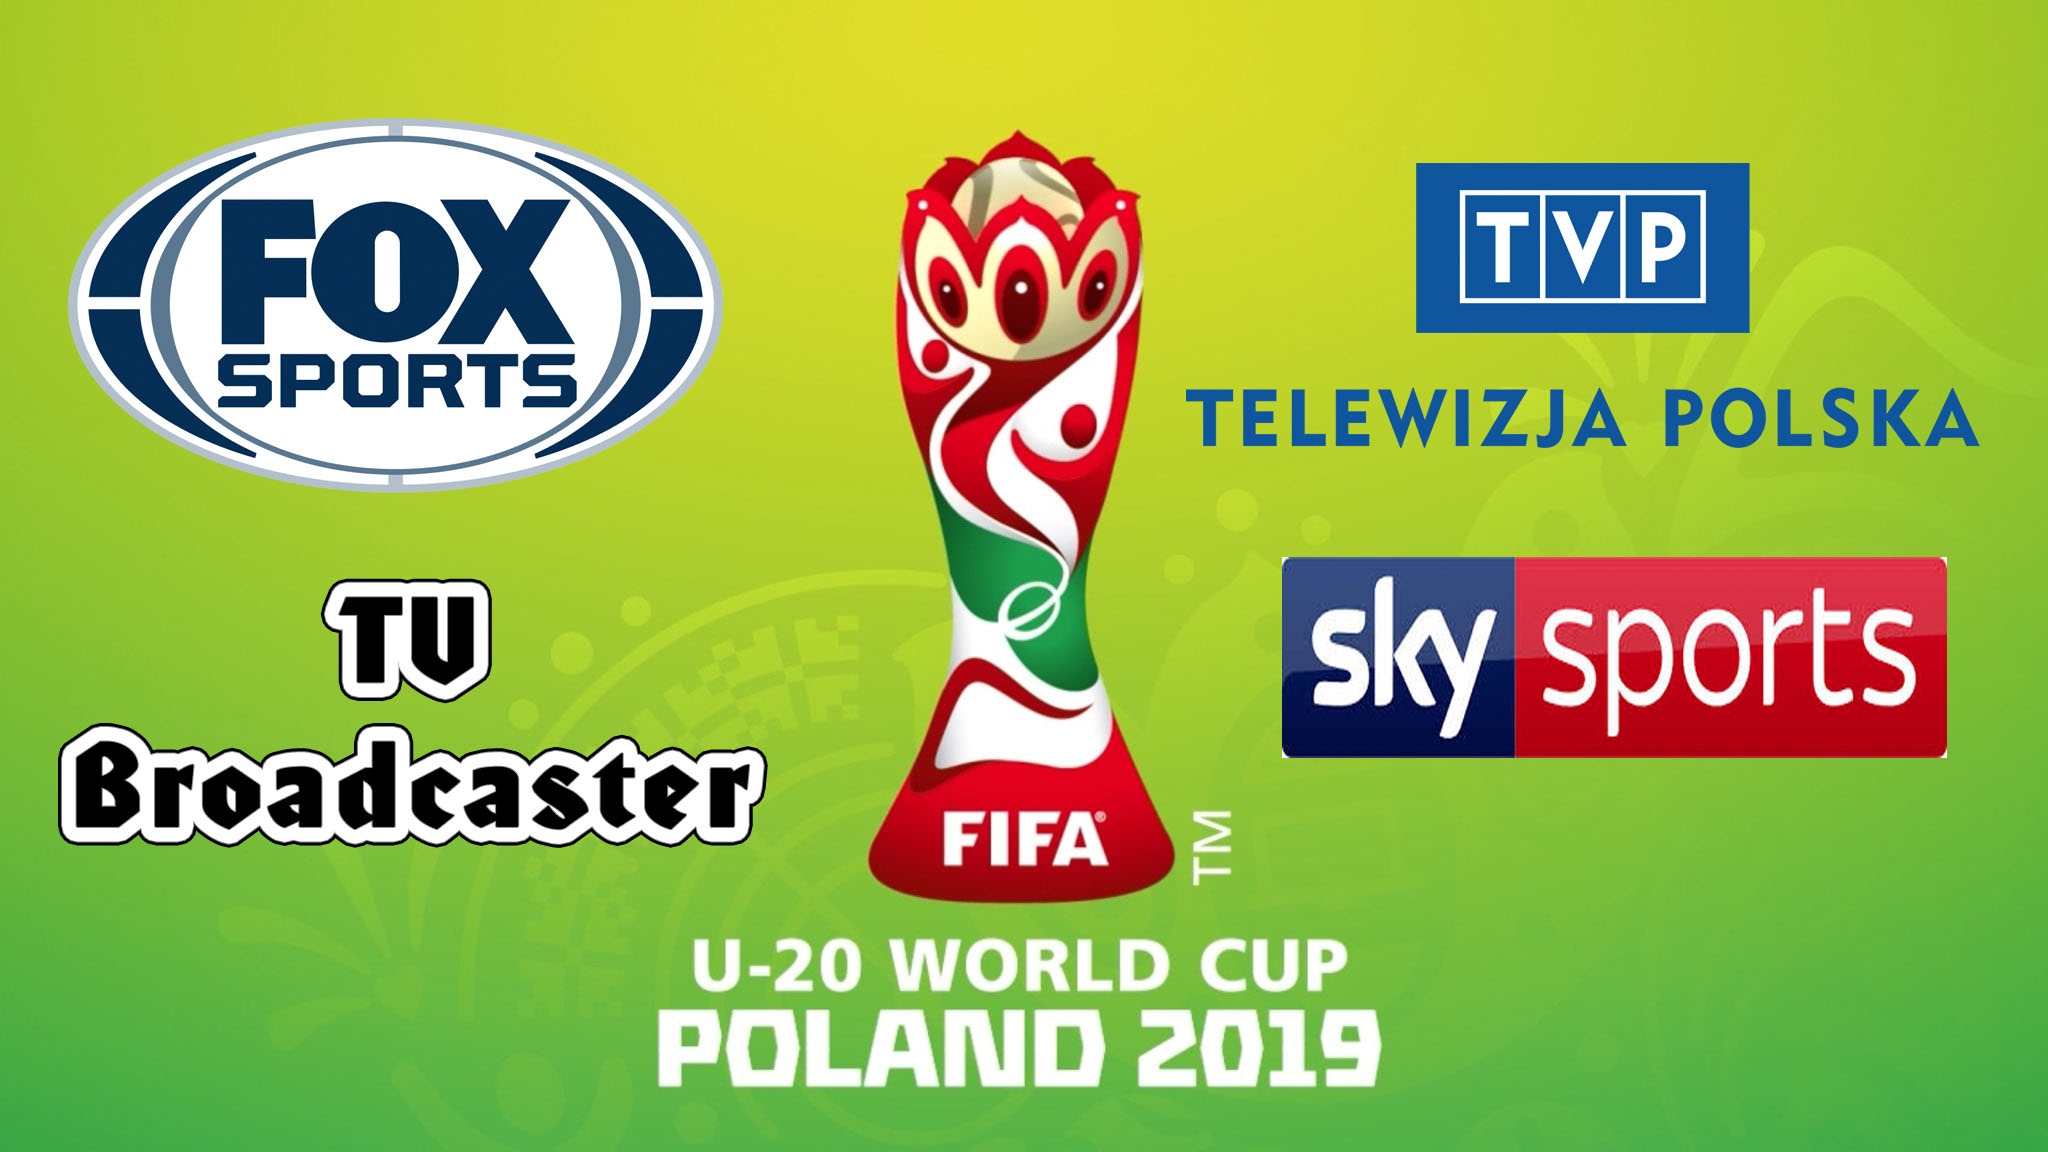 Fifa U 20 World cup Poland 2019